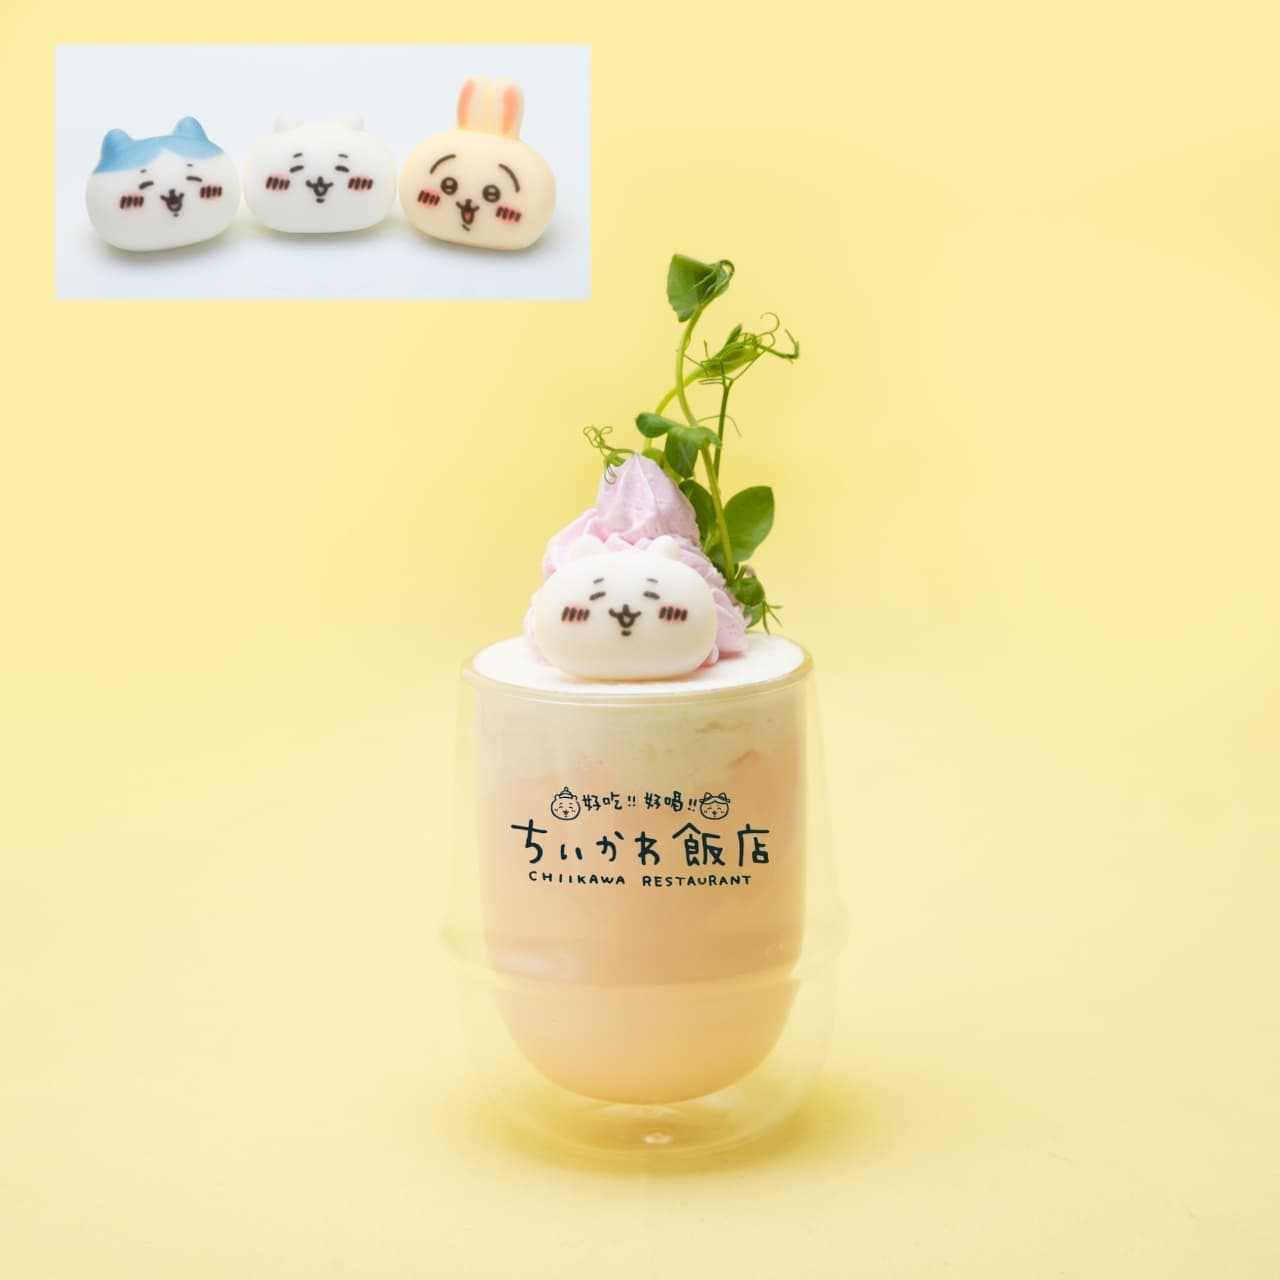 Chiikawa Iitan Drink Stand "Onsen-style hot apricot milk with marshmallows".